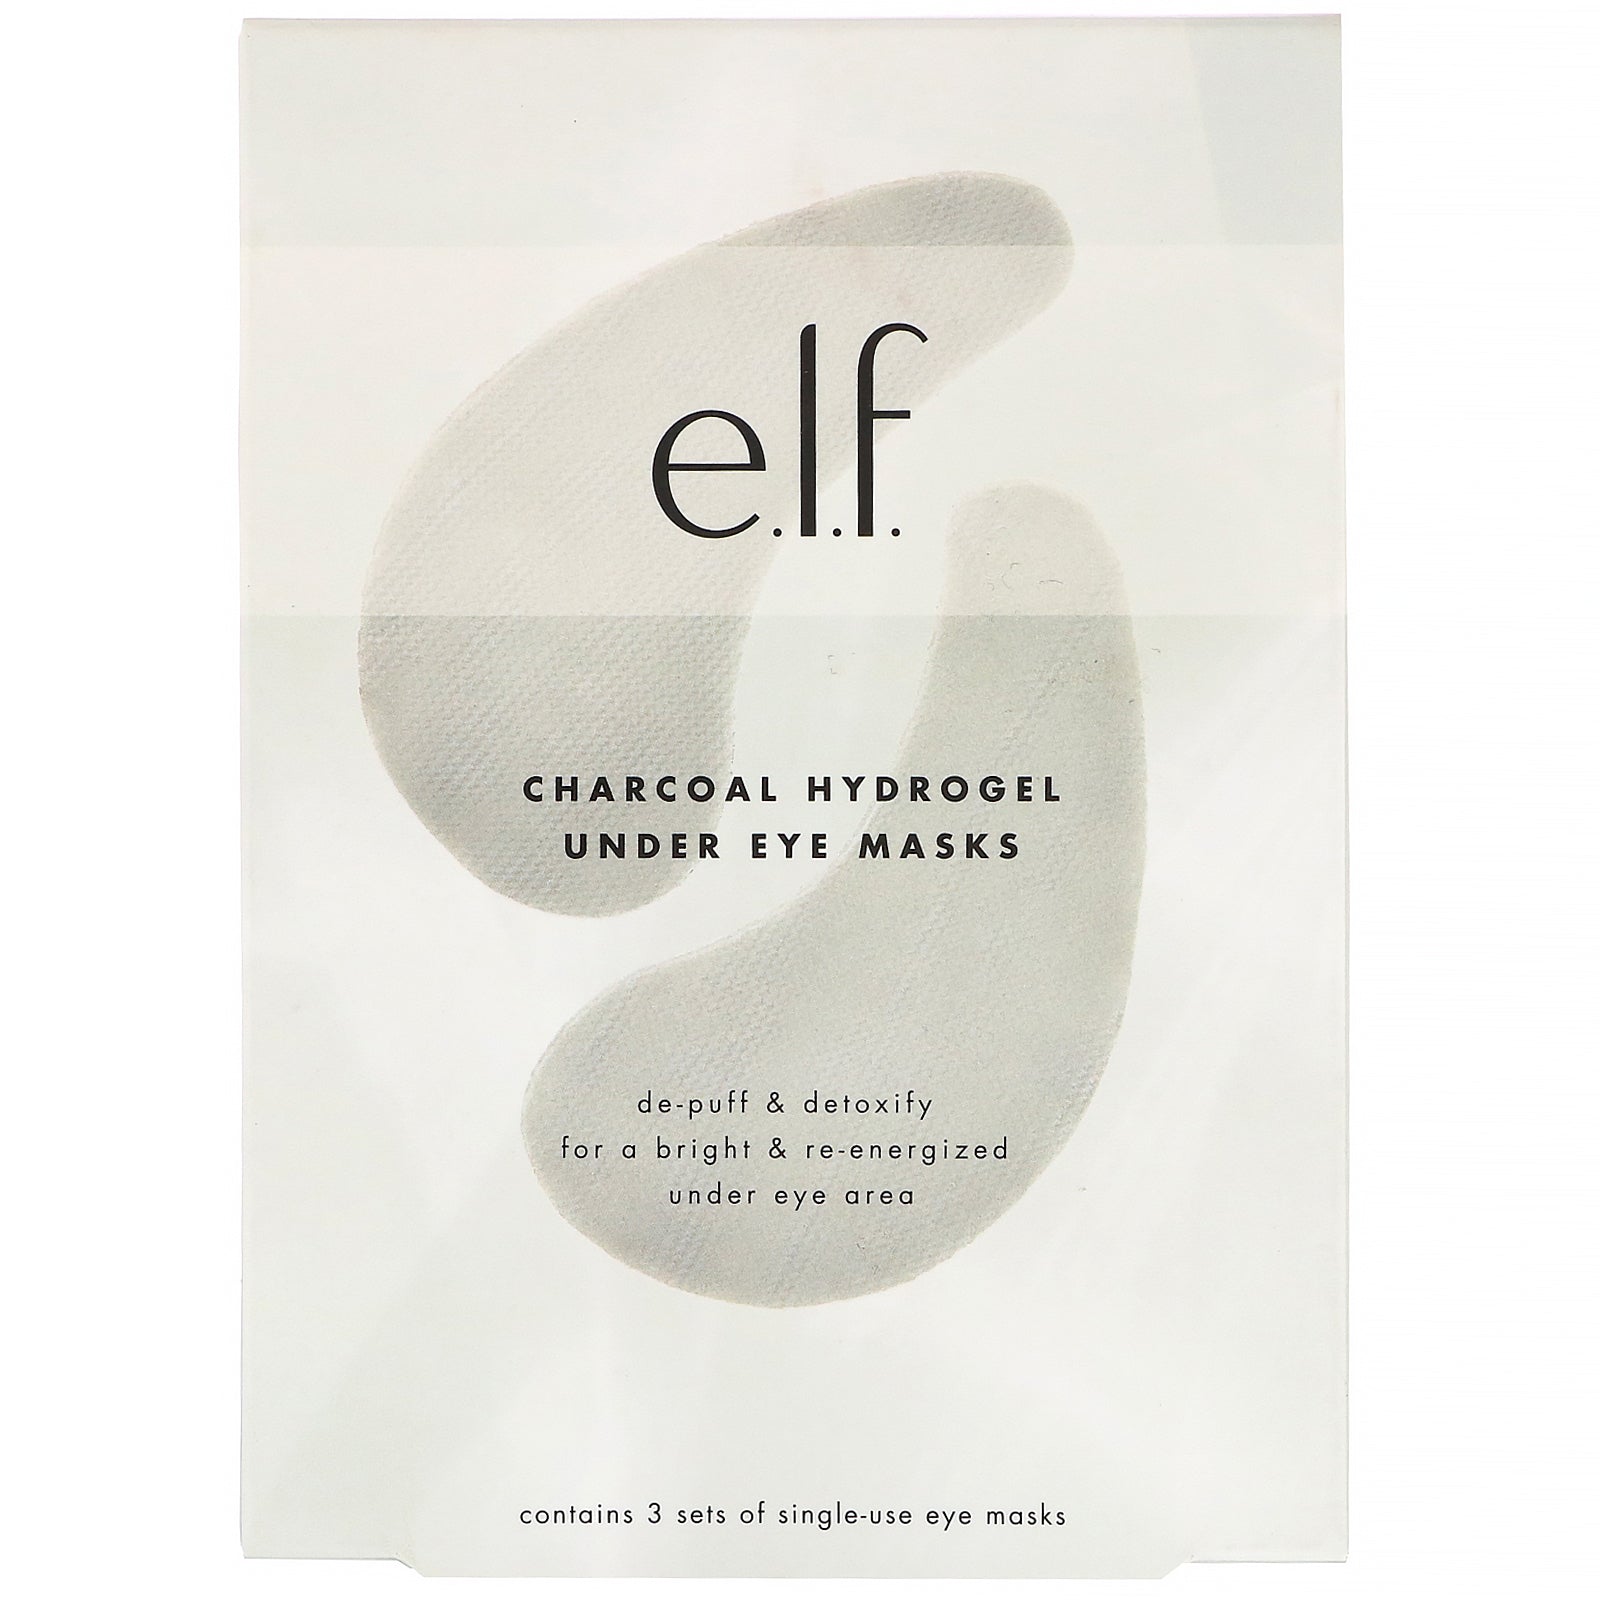 E.L.F., Charcoal Hydrogel Under Eye Masks, 3 Piece Set